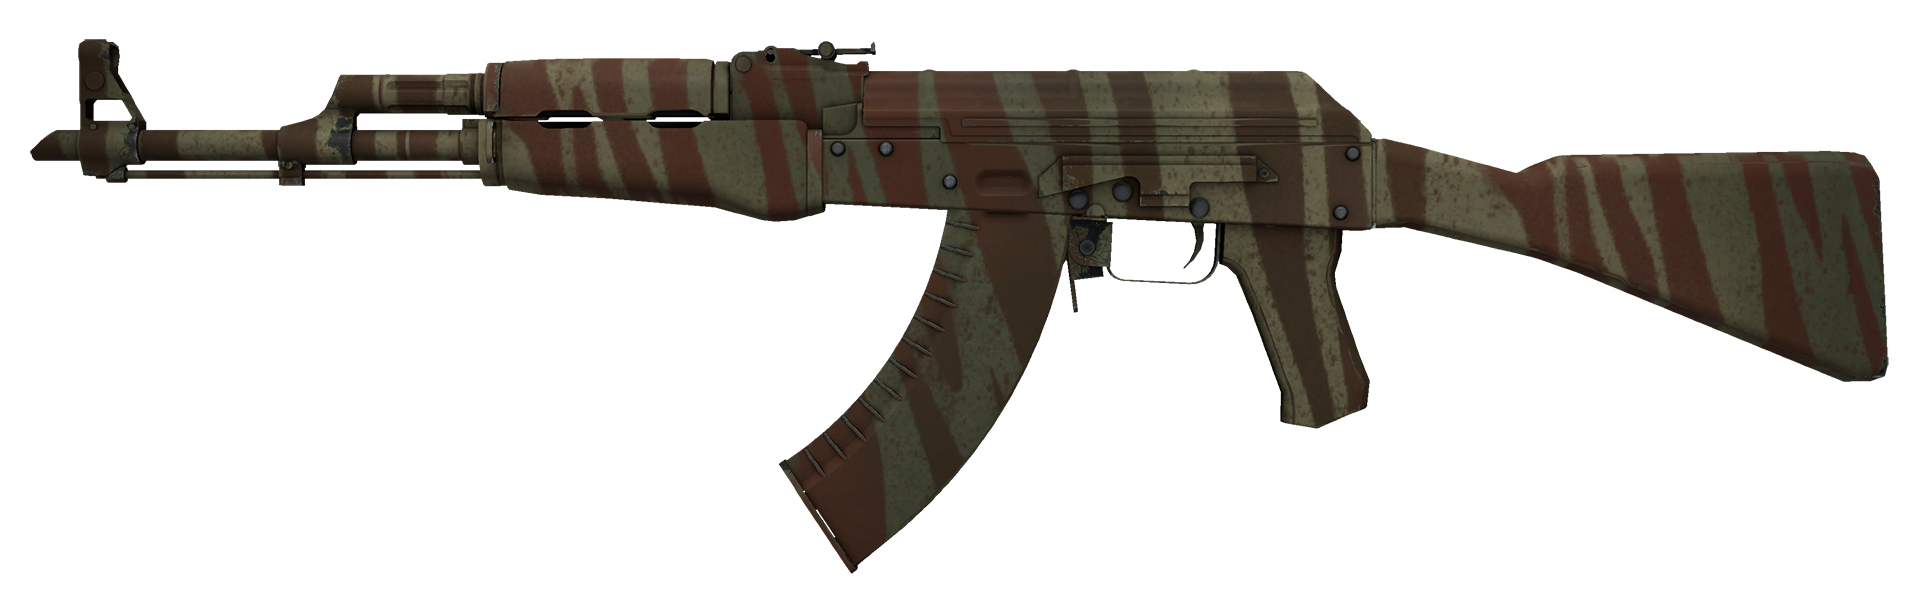 AK-47 Predator Large Rendering